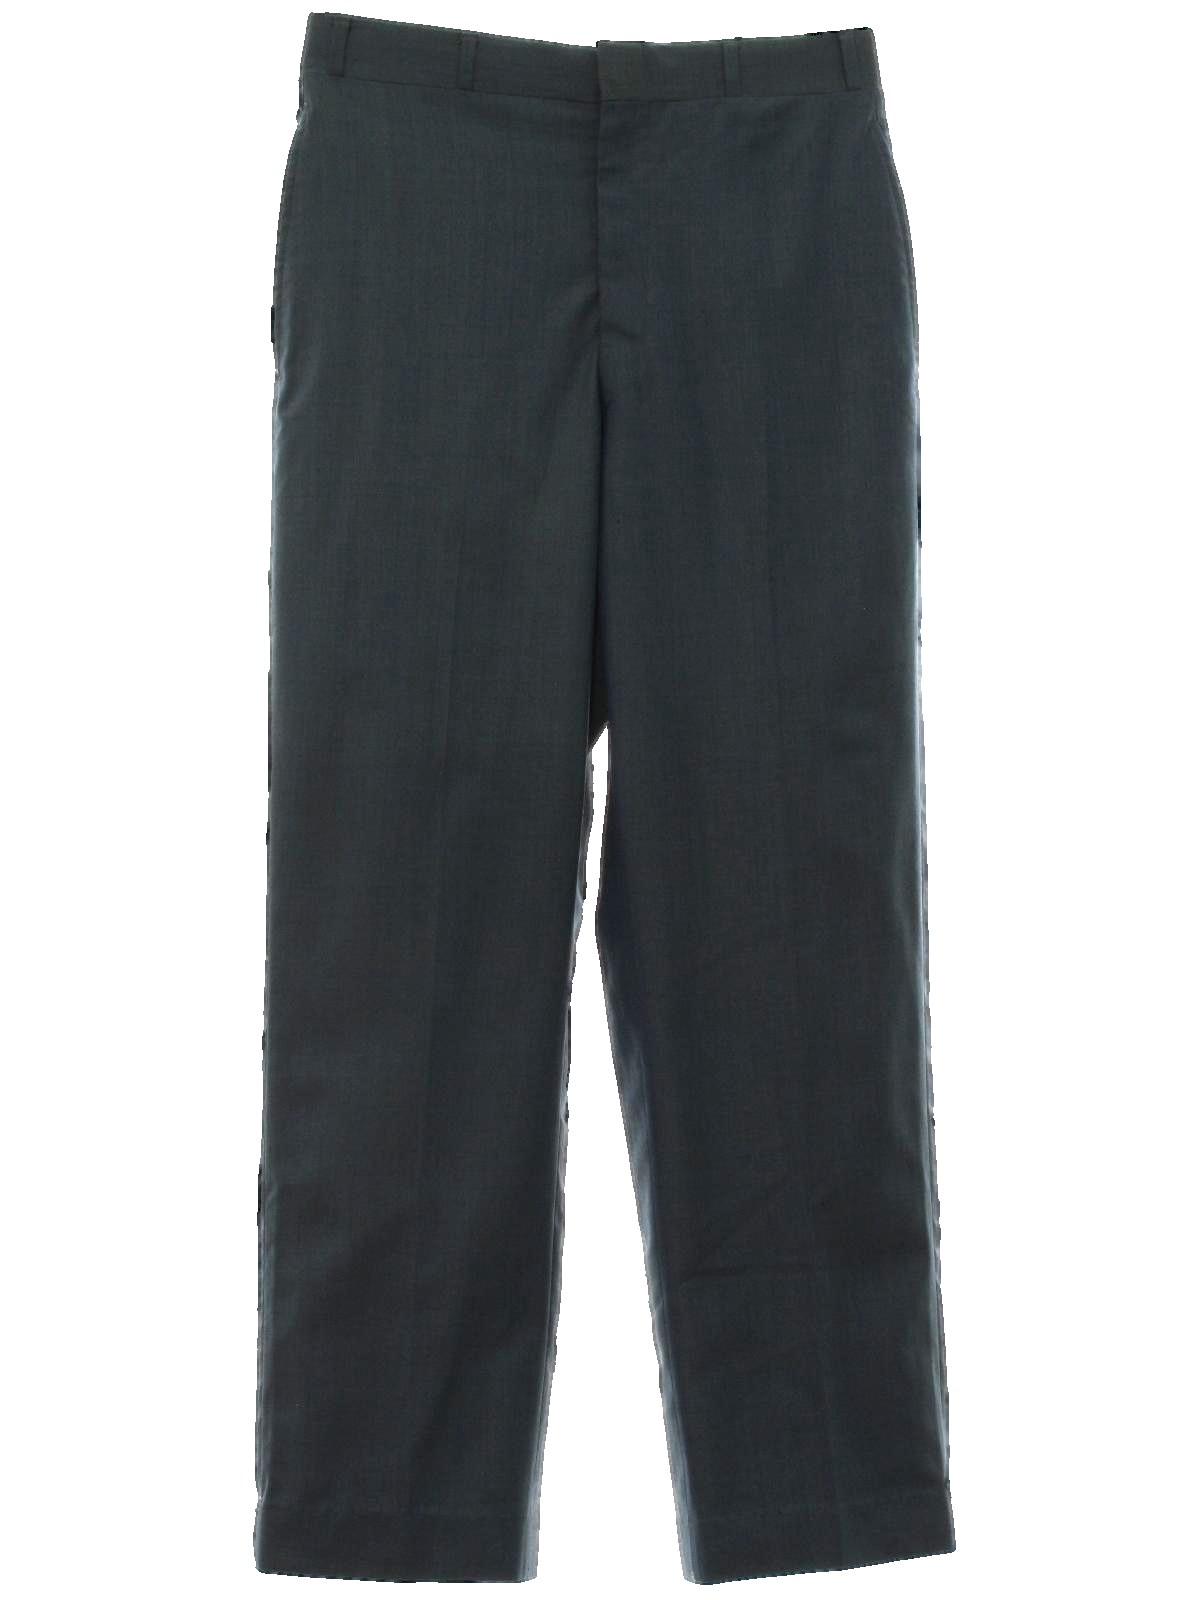 Retro 1960's Pants: 60s -No Label- Mens hazy blue-grey solid colored ...